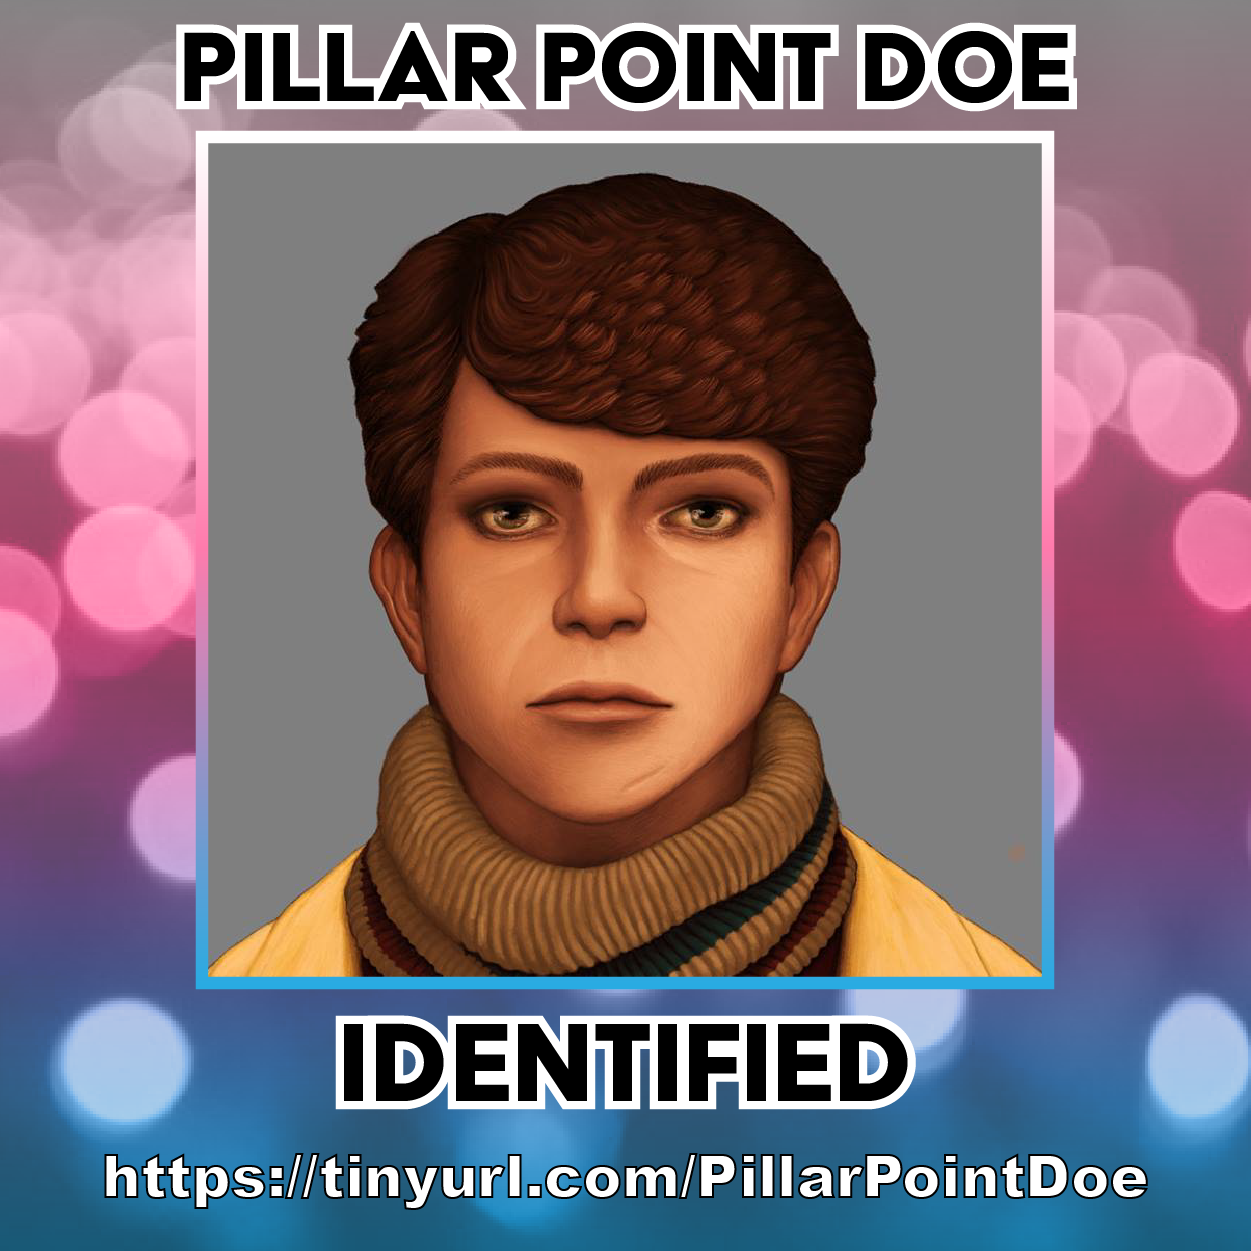 tdor_pillarpoint.png